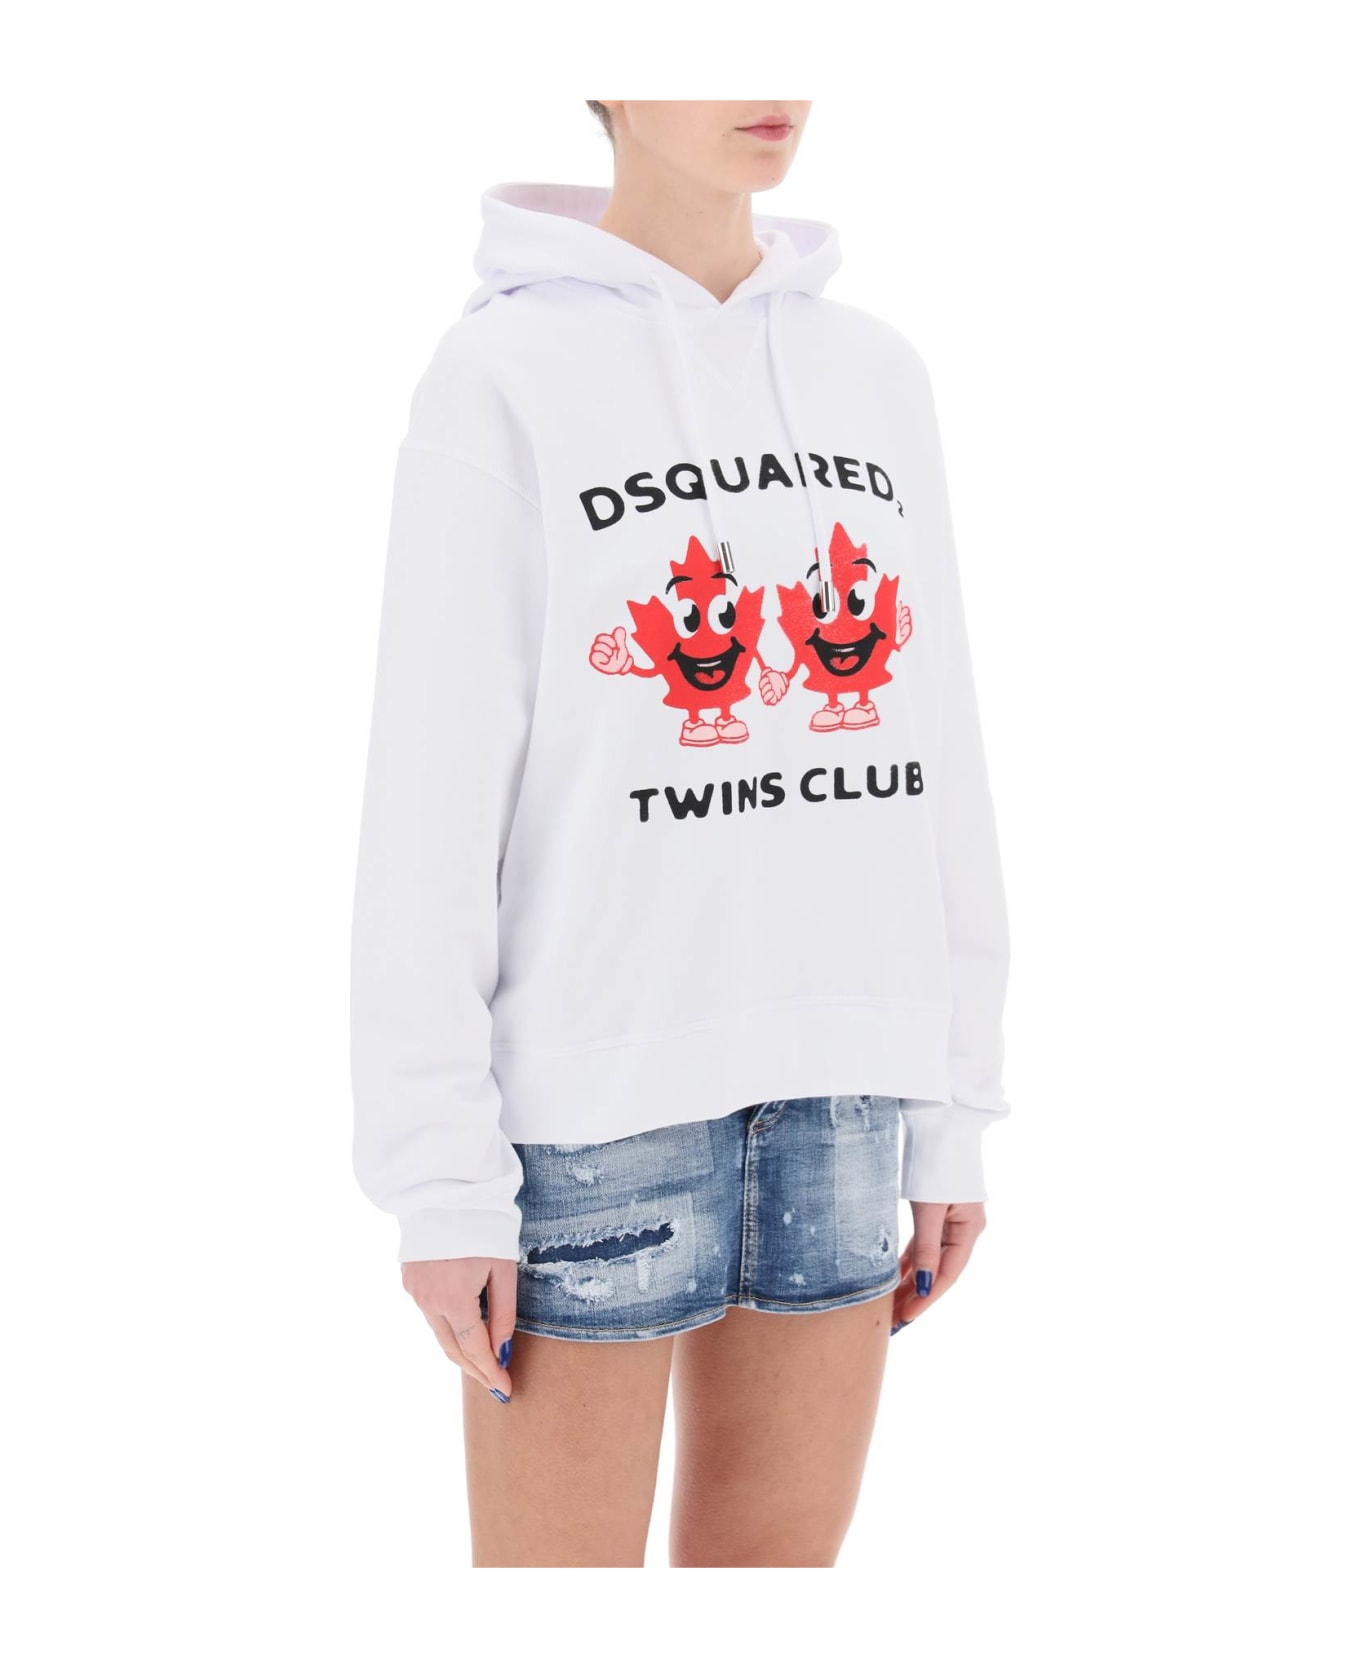 Dsquared2 Twins Club Hooded Sweatshirt - WHITE (White)